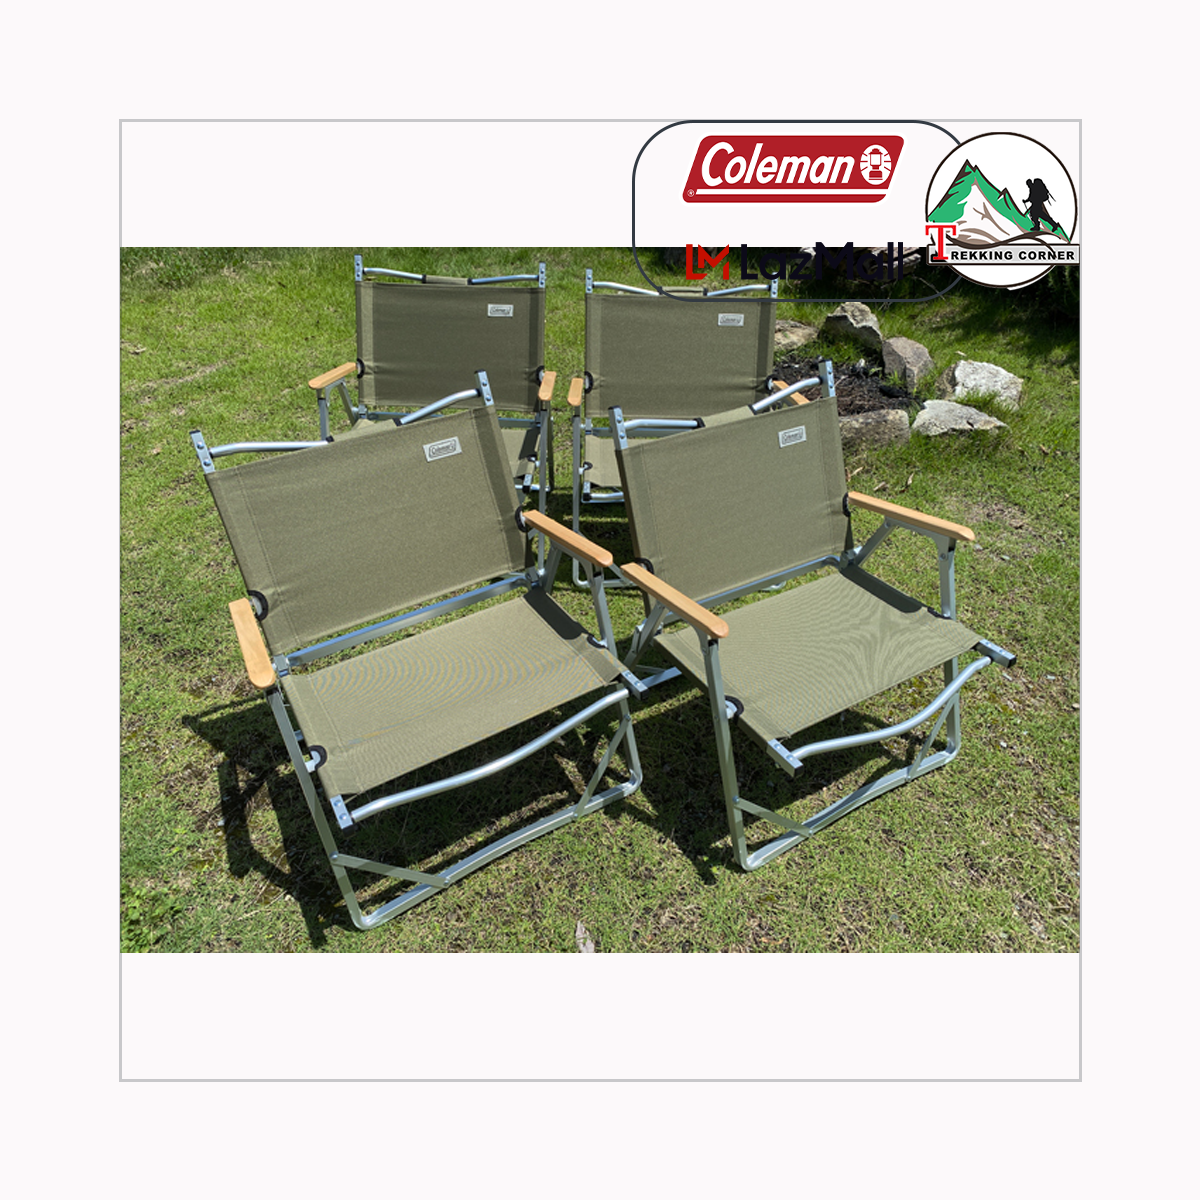 COLEMAN เก้าอี้พับพกพา น้ำหนักเบา JP Compact Folding Chair